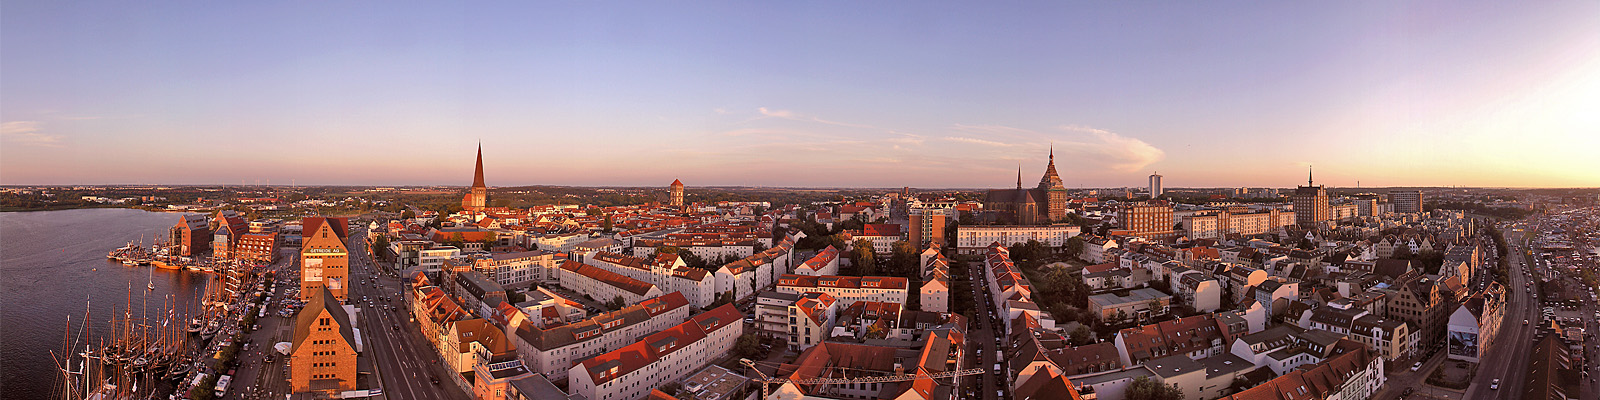 Panorama: Rostock Altstadt im Abendlicht - Motivnummer: hro-alt-03